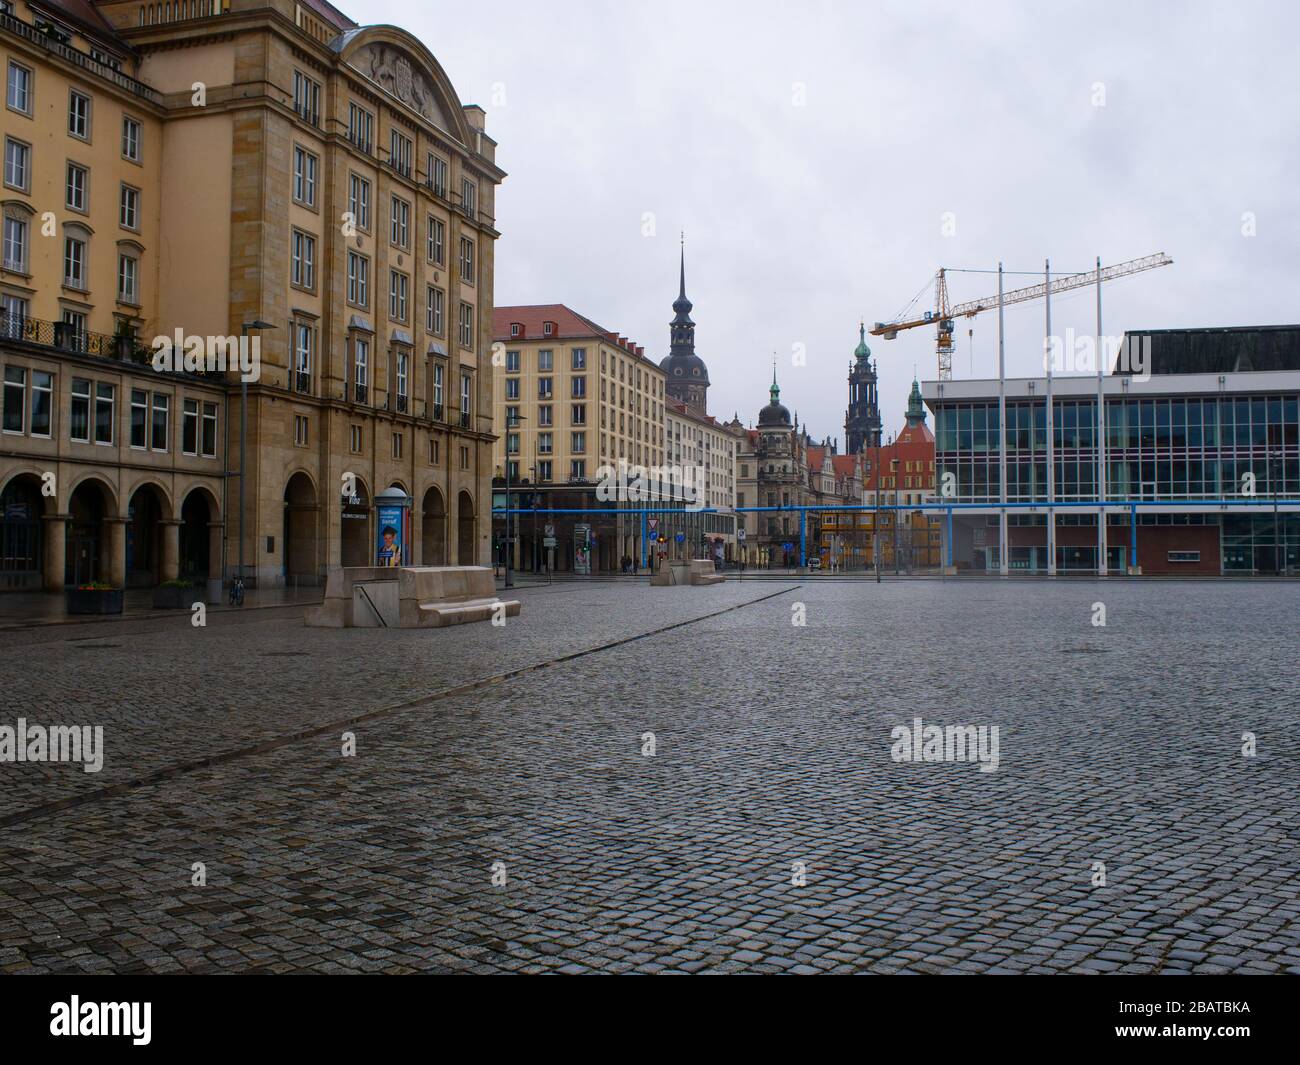 Altmarkt Dresden während Coronavirus Lockdown im Regen COVID-19 Ausgangsbeschränkung innere Altstadt Foto Stock